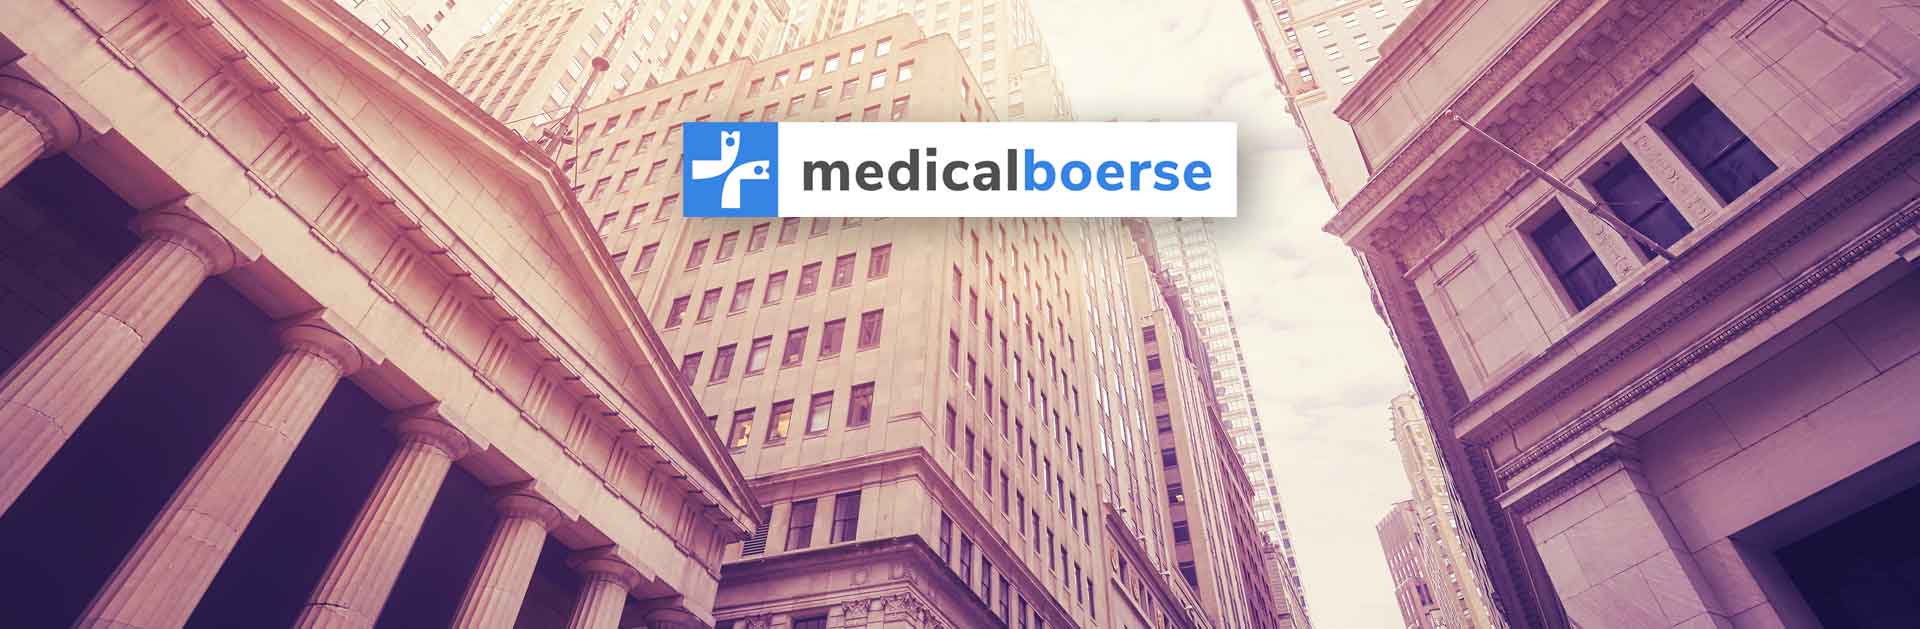 medicalboerse medical network stiftung